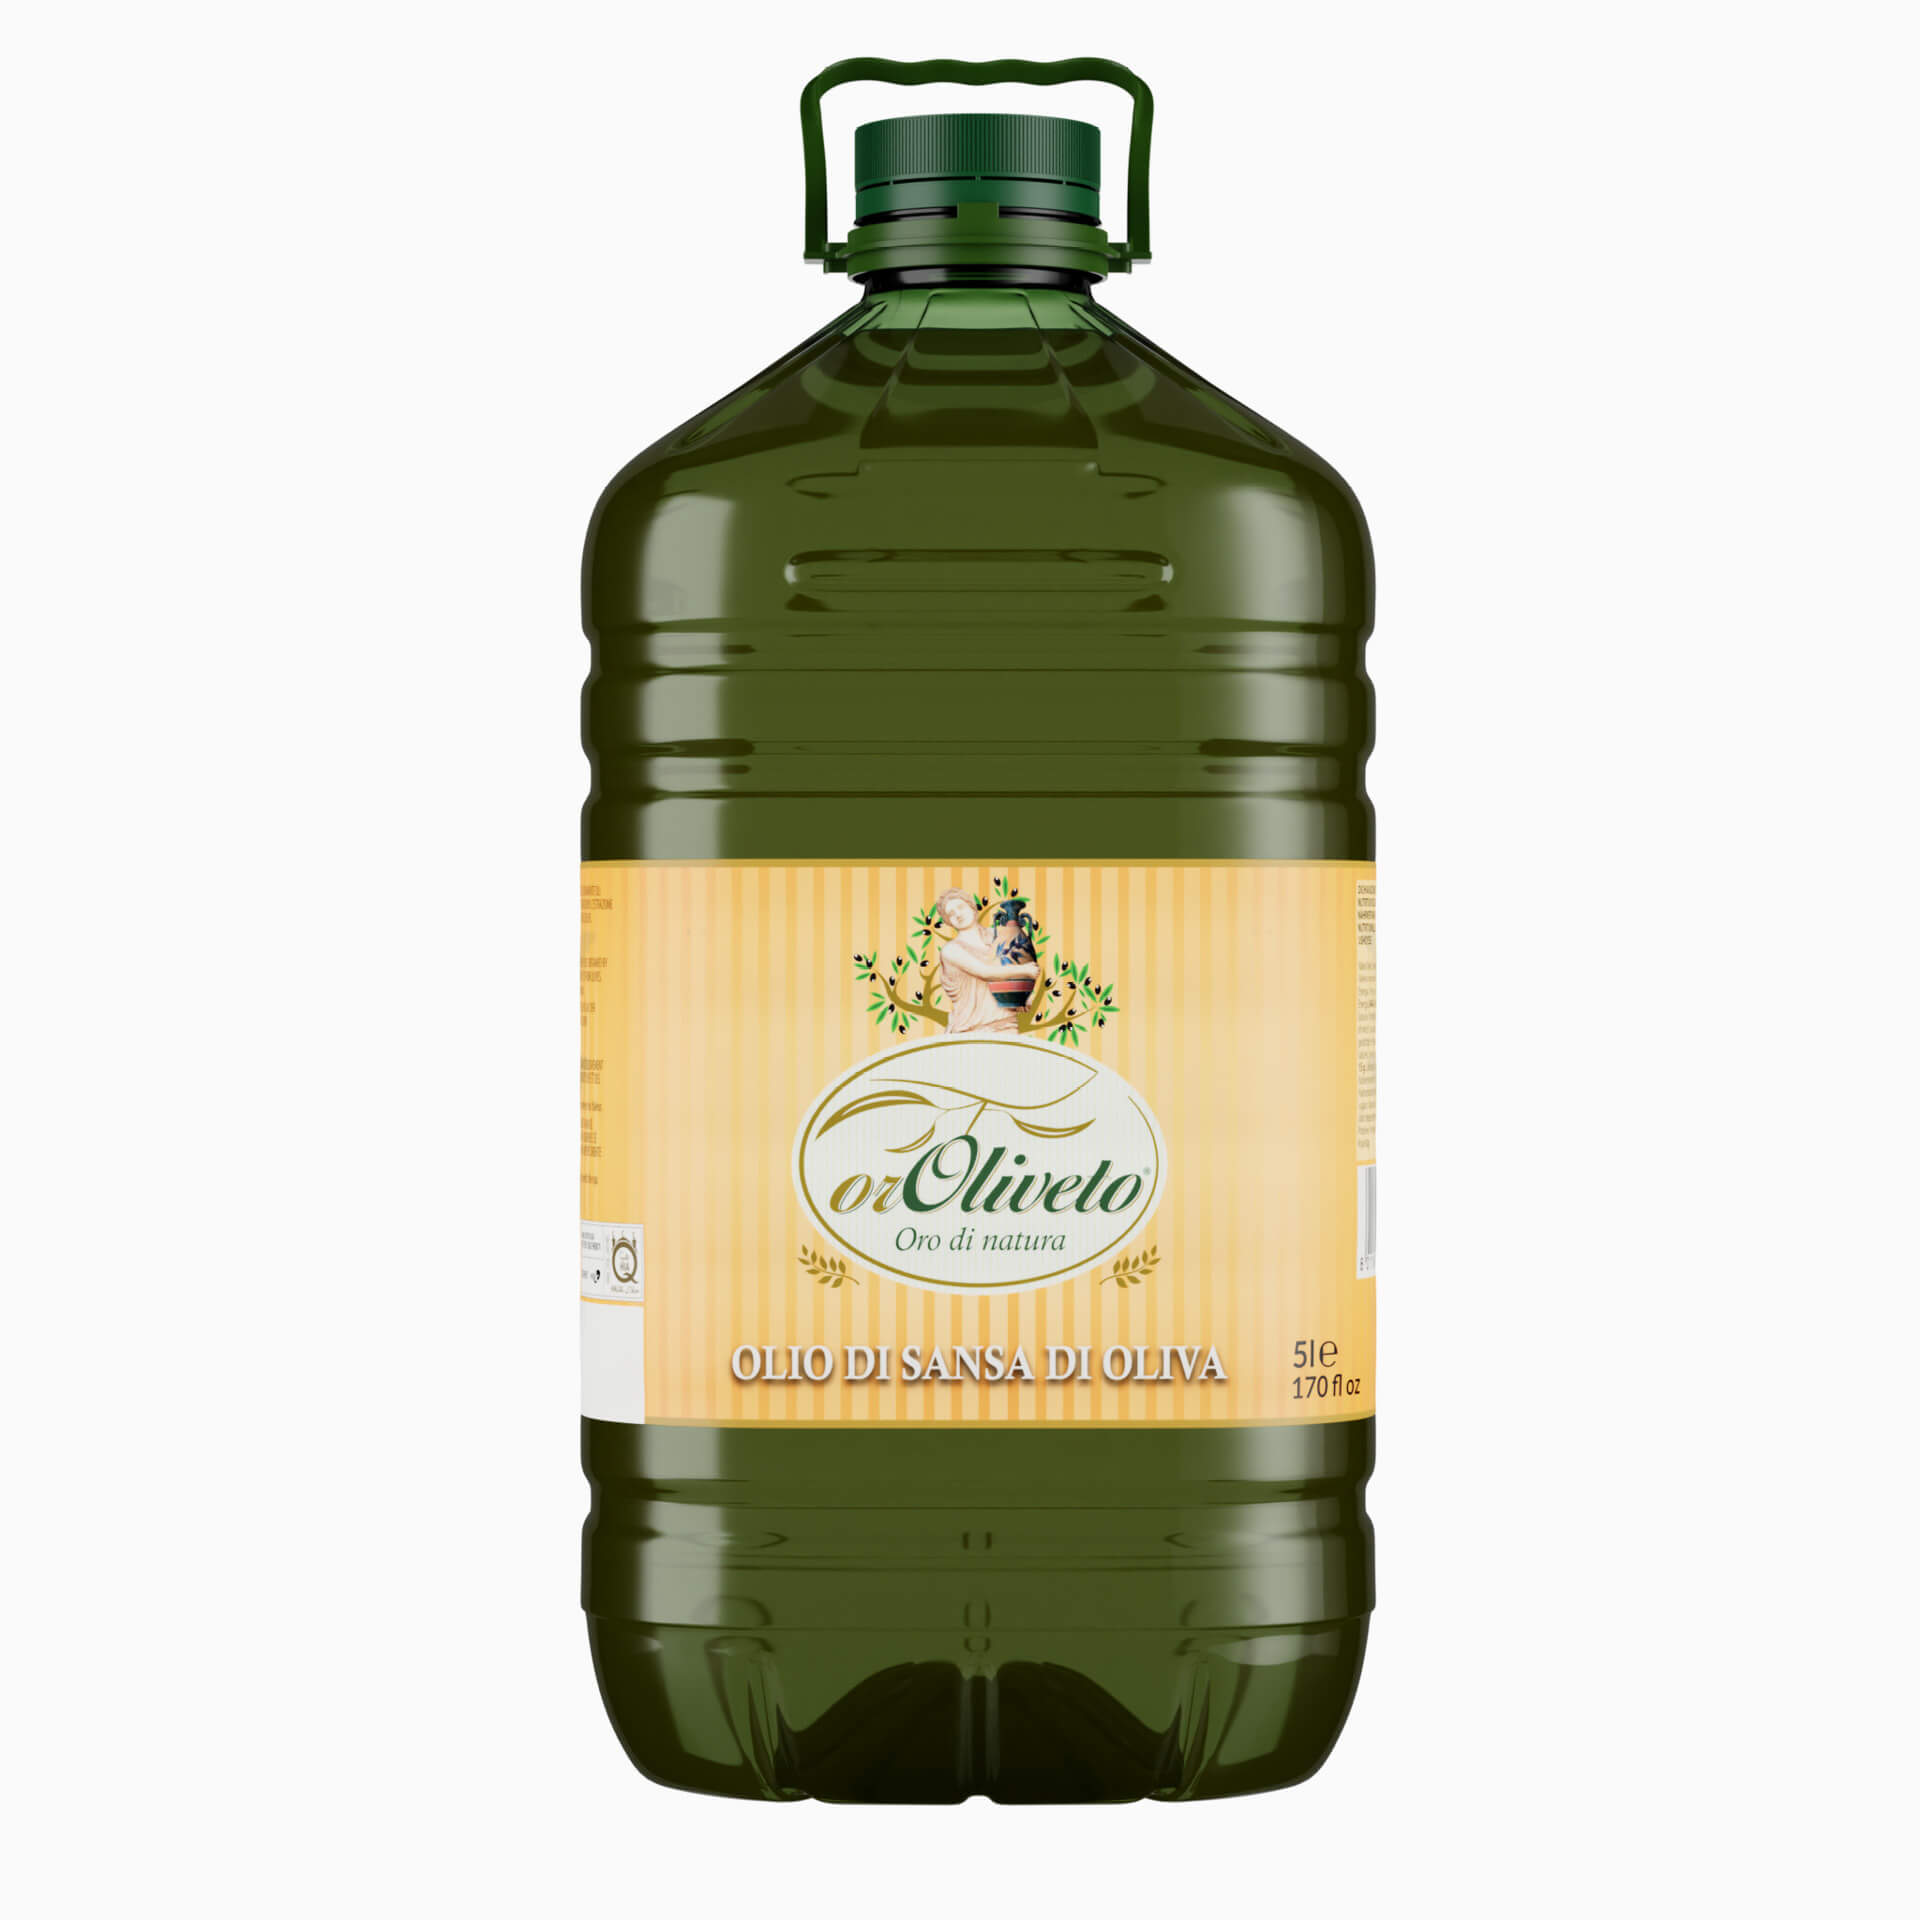 Aceite de Orujo de Oliva